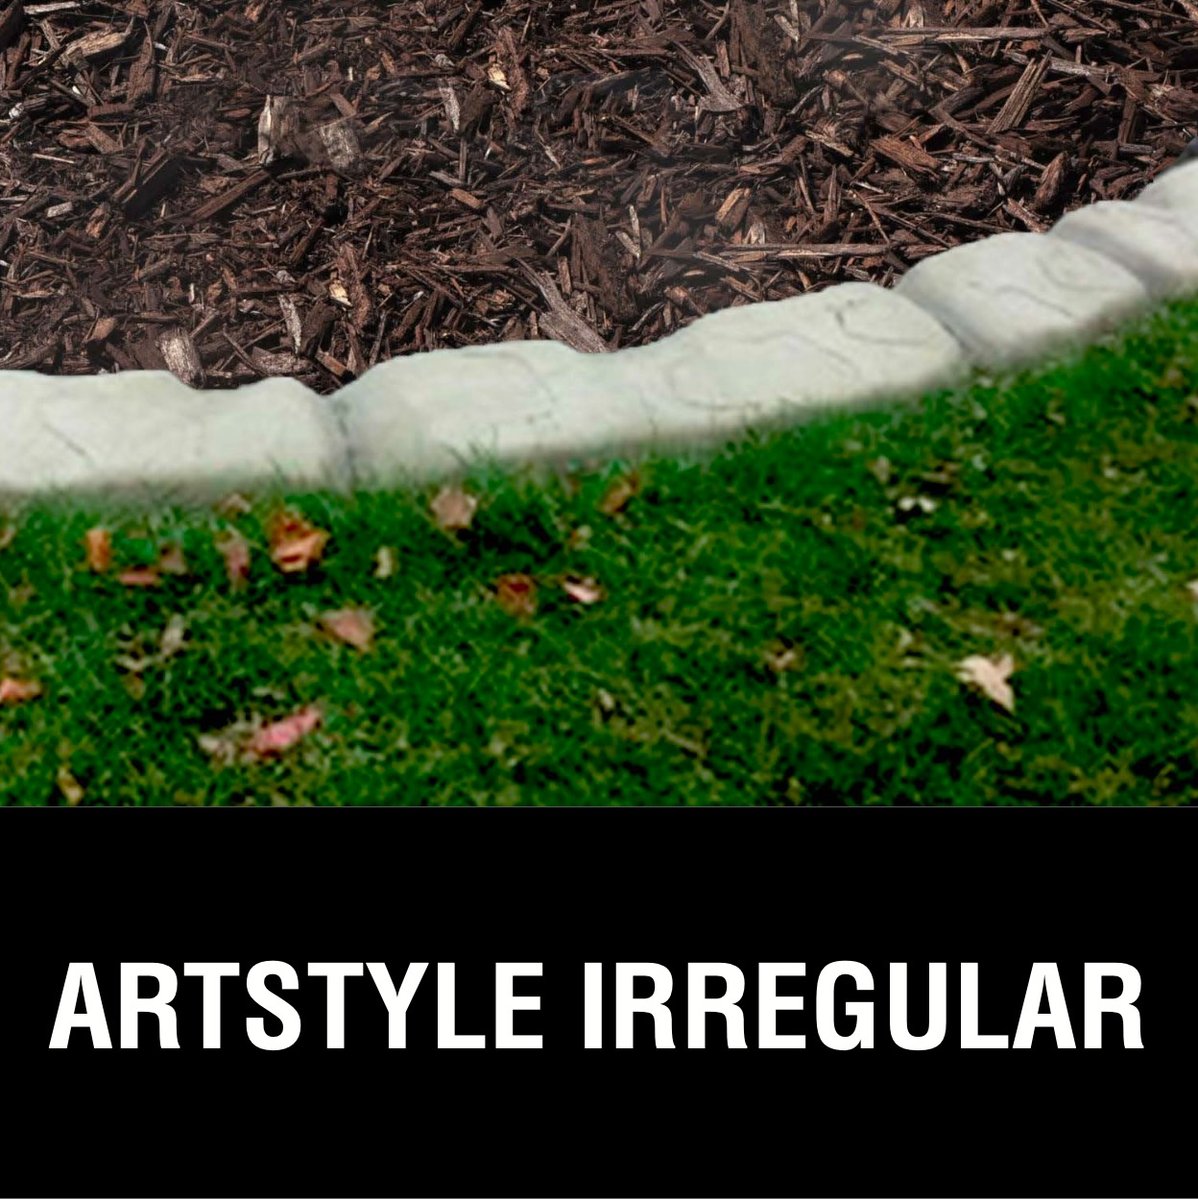 Artstyle Irregular - Artistic